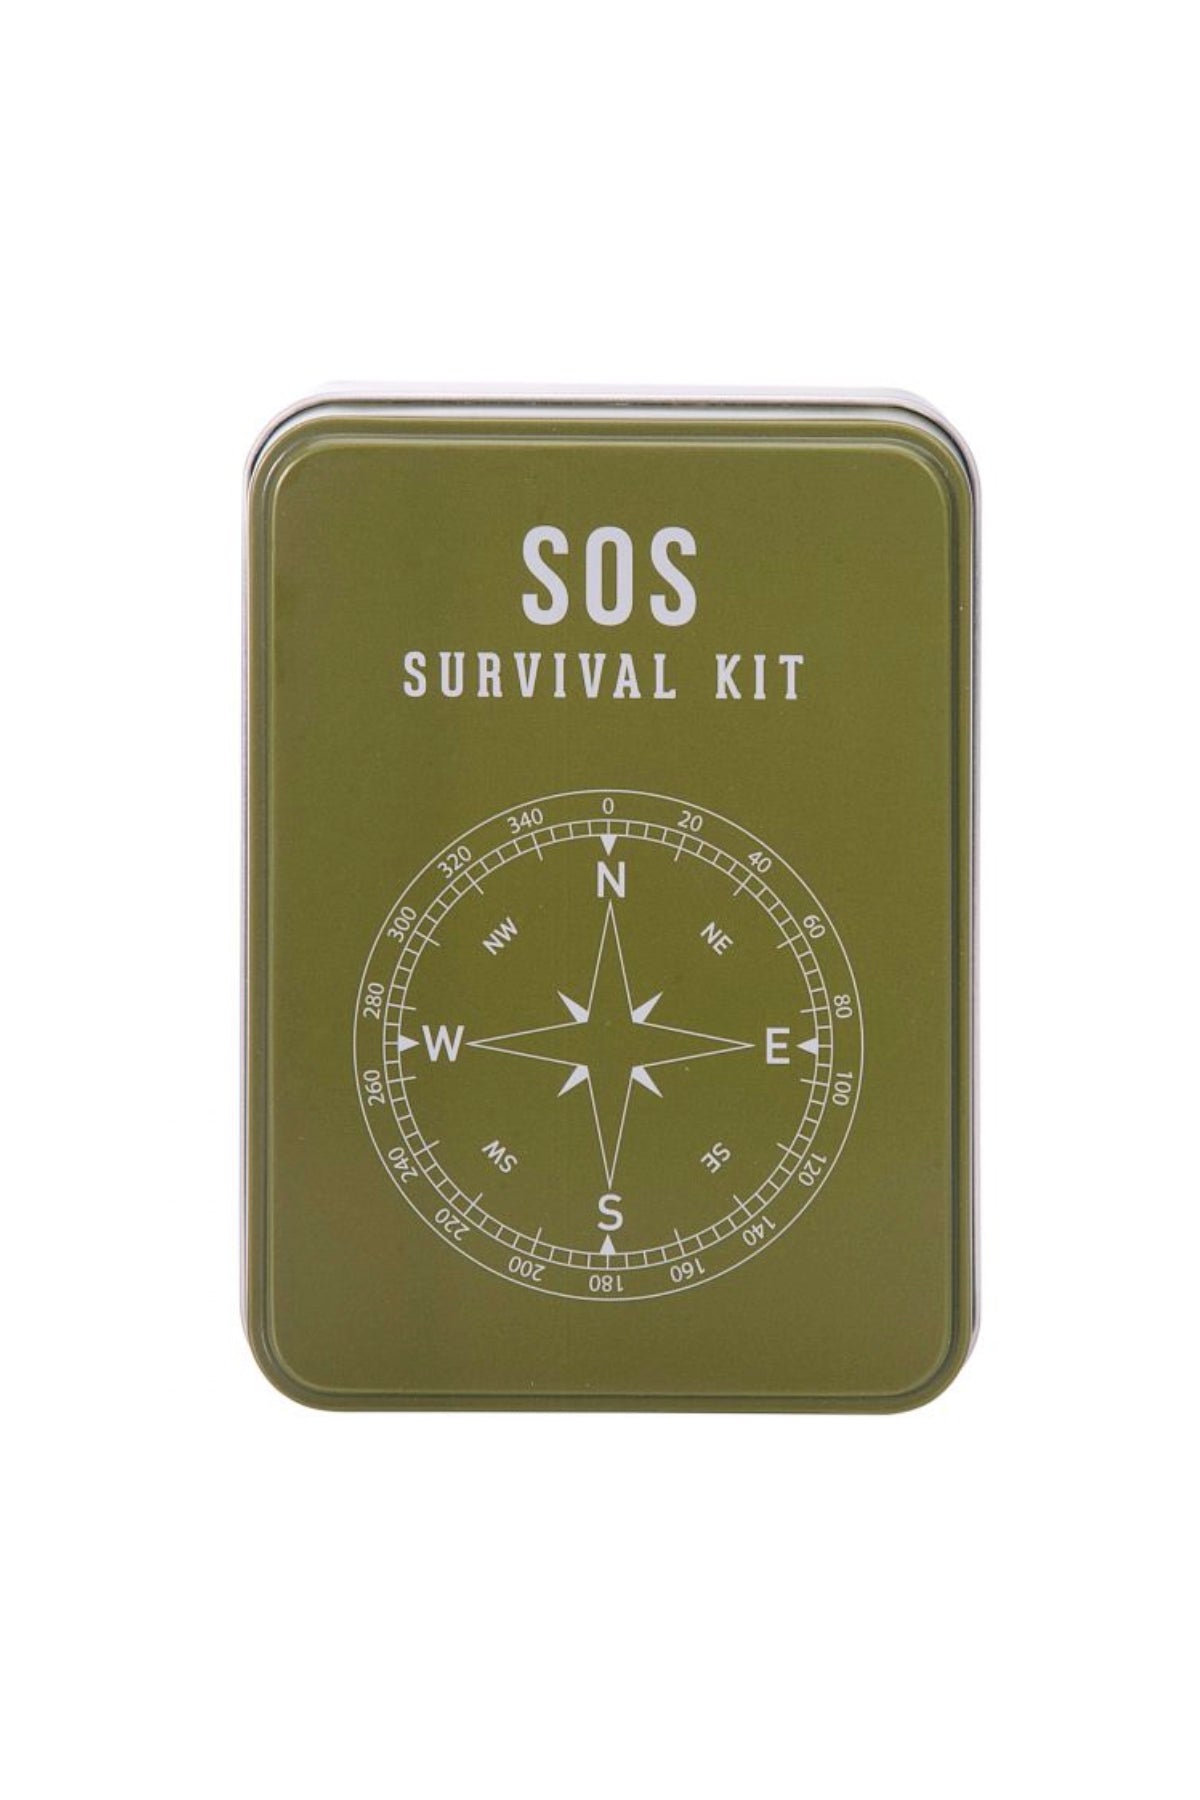 SOS Survival Kit in a Tin